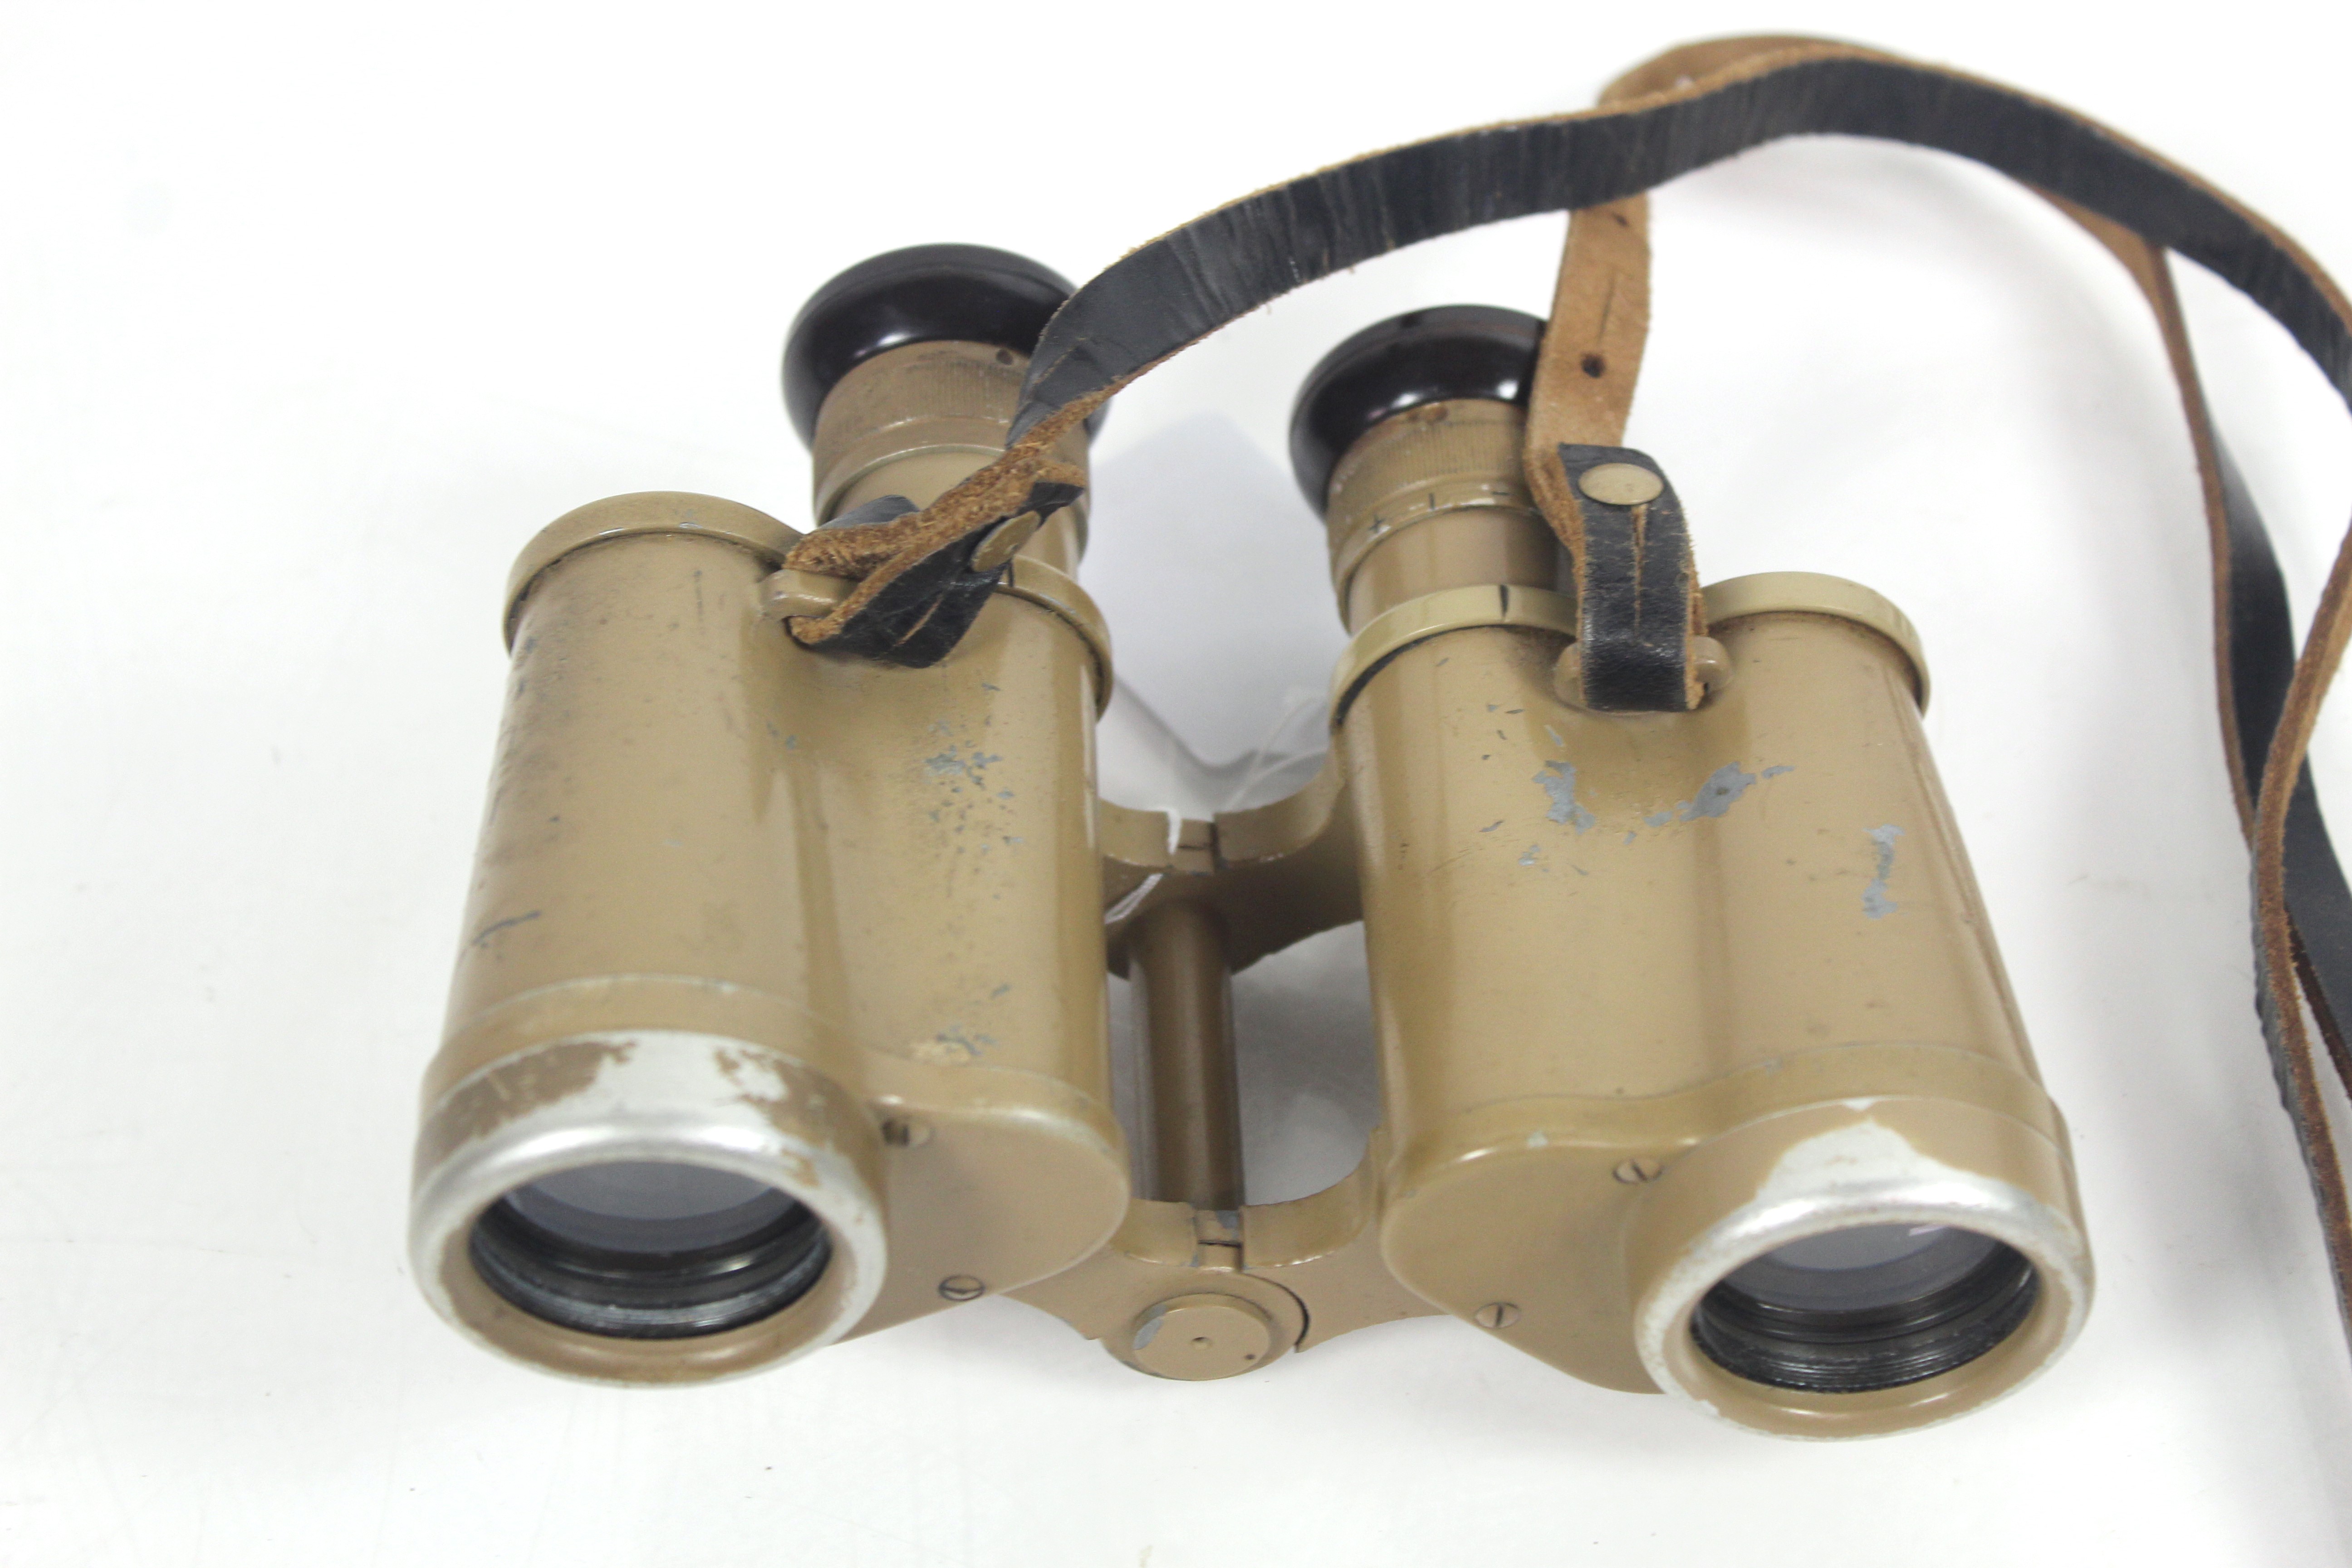 A pair of WWII era German binoculars marked 6x30 a - Image 4 of 4